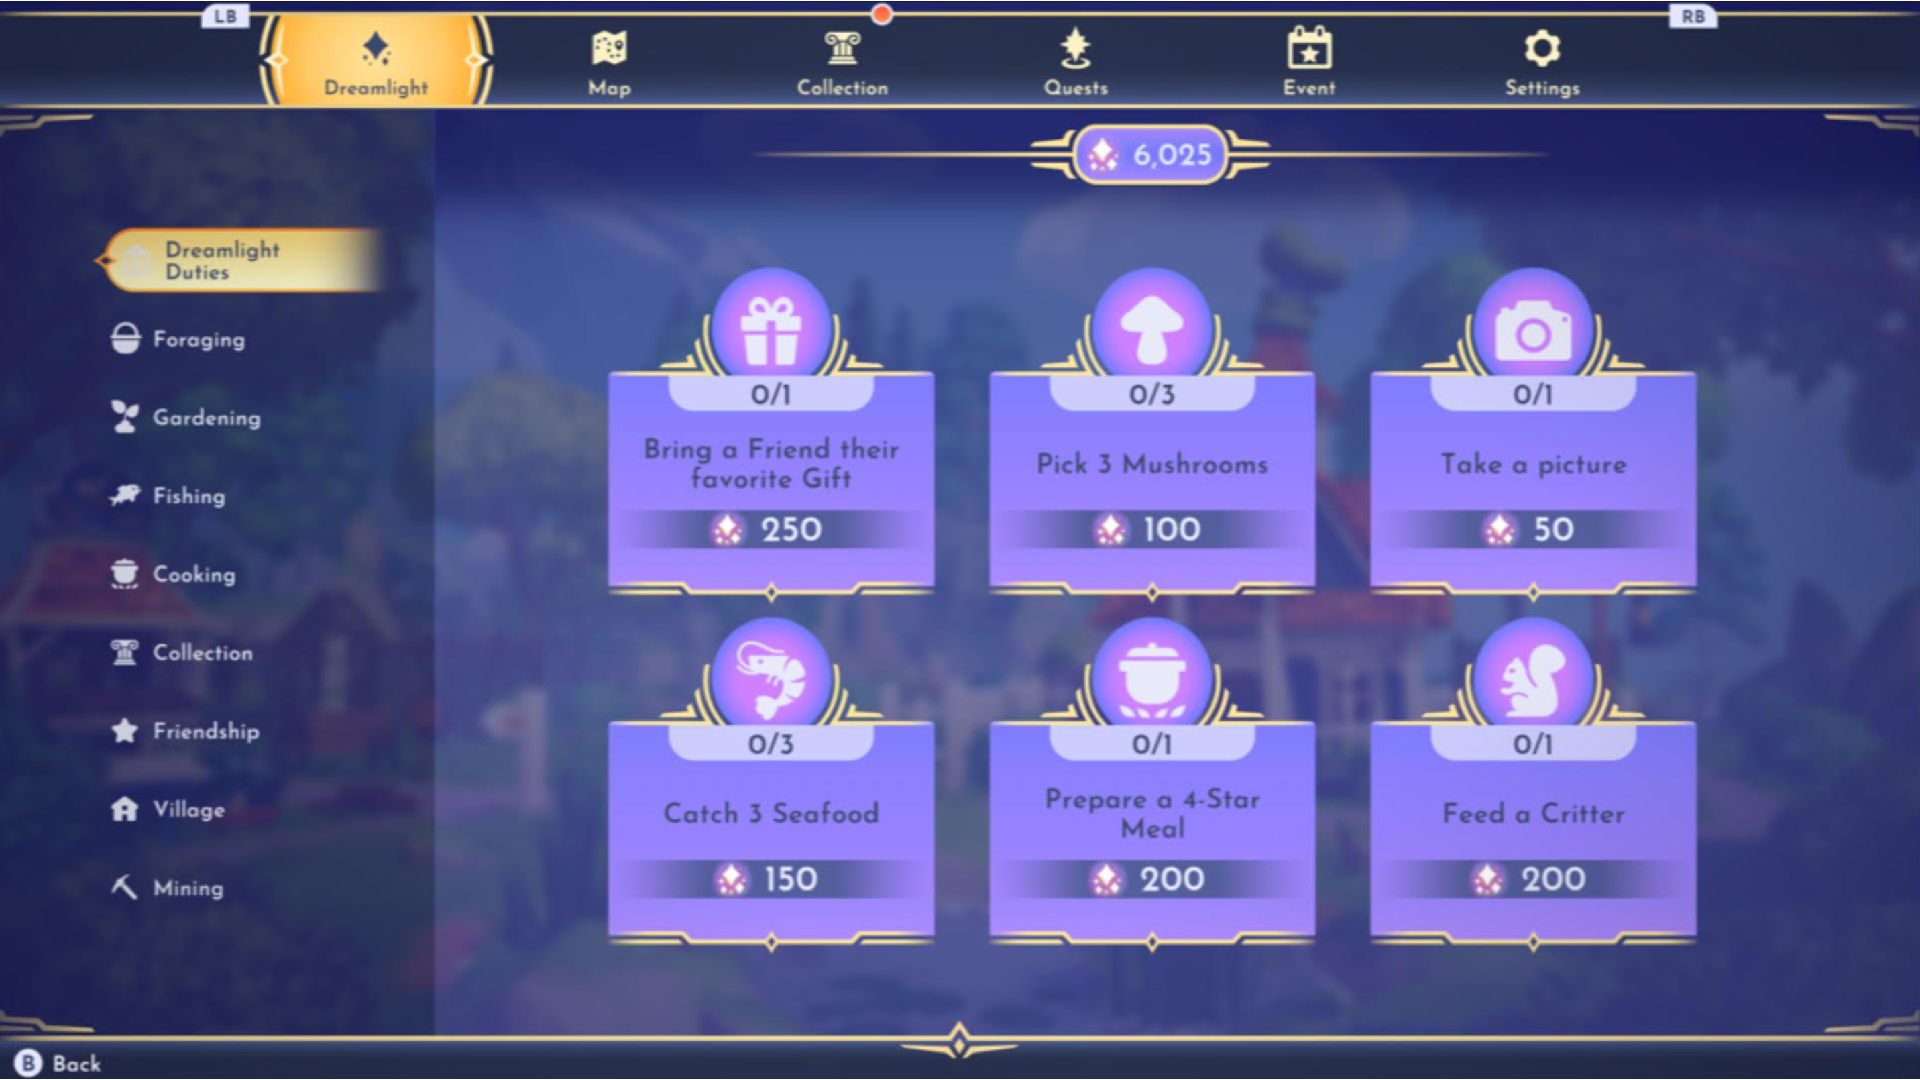 Disney Dreamlight Valley get Dreamlight: The Dremalight Tasks menu can be seen